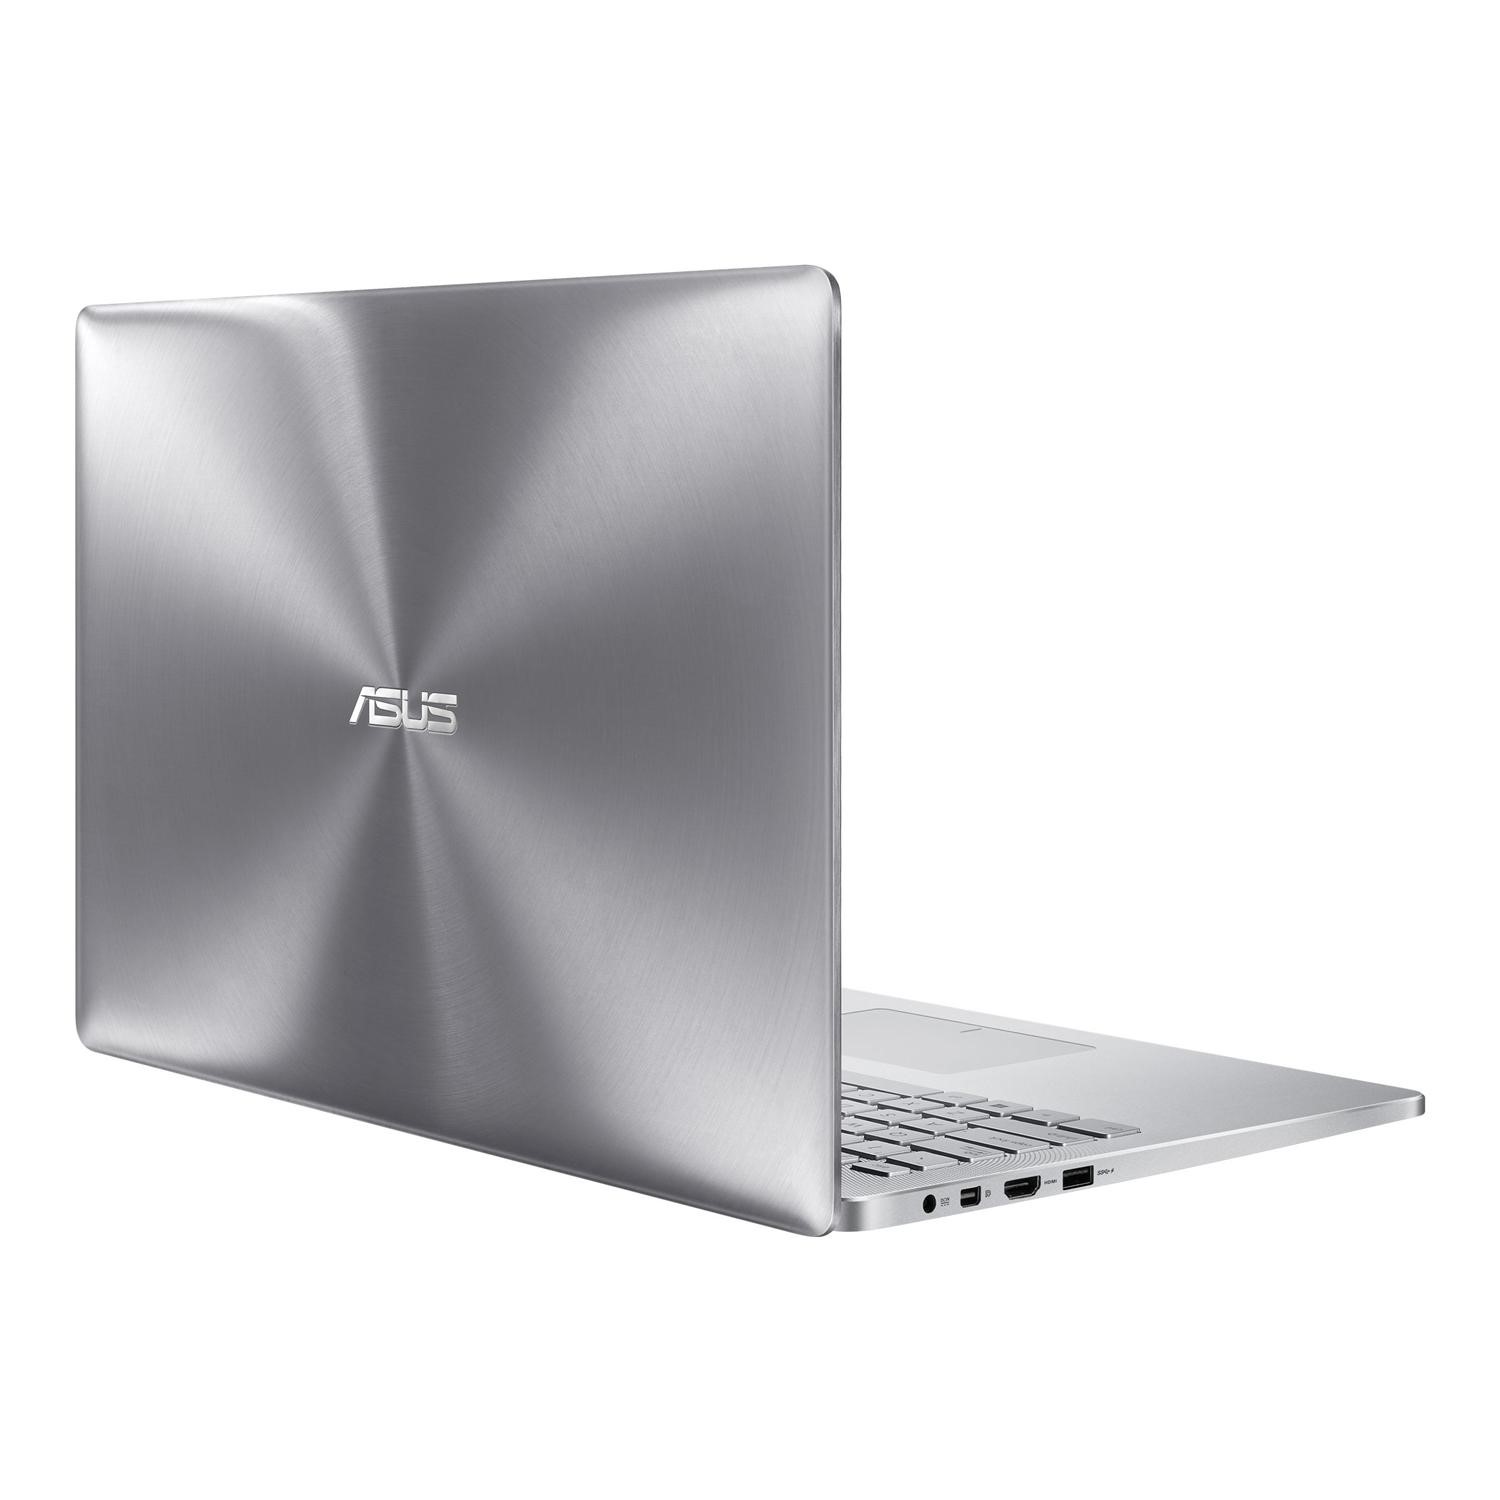 Asus Zenbook 15 6 Intel Core I7 4750hq 12gb 1tb 256gb Ssd Windows 10 Nvidia Geforce Gtx960m Laptop Laptops Direct